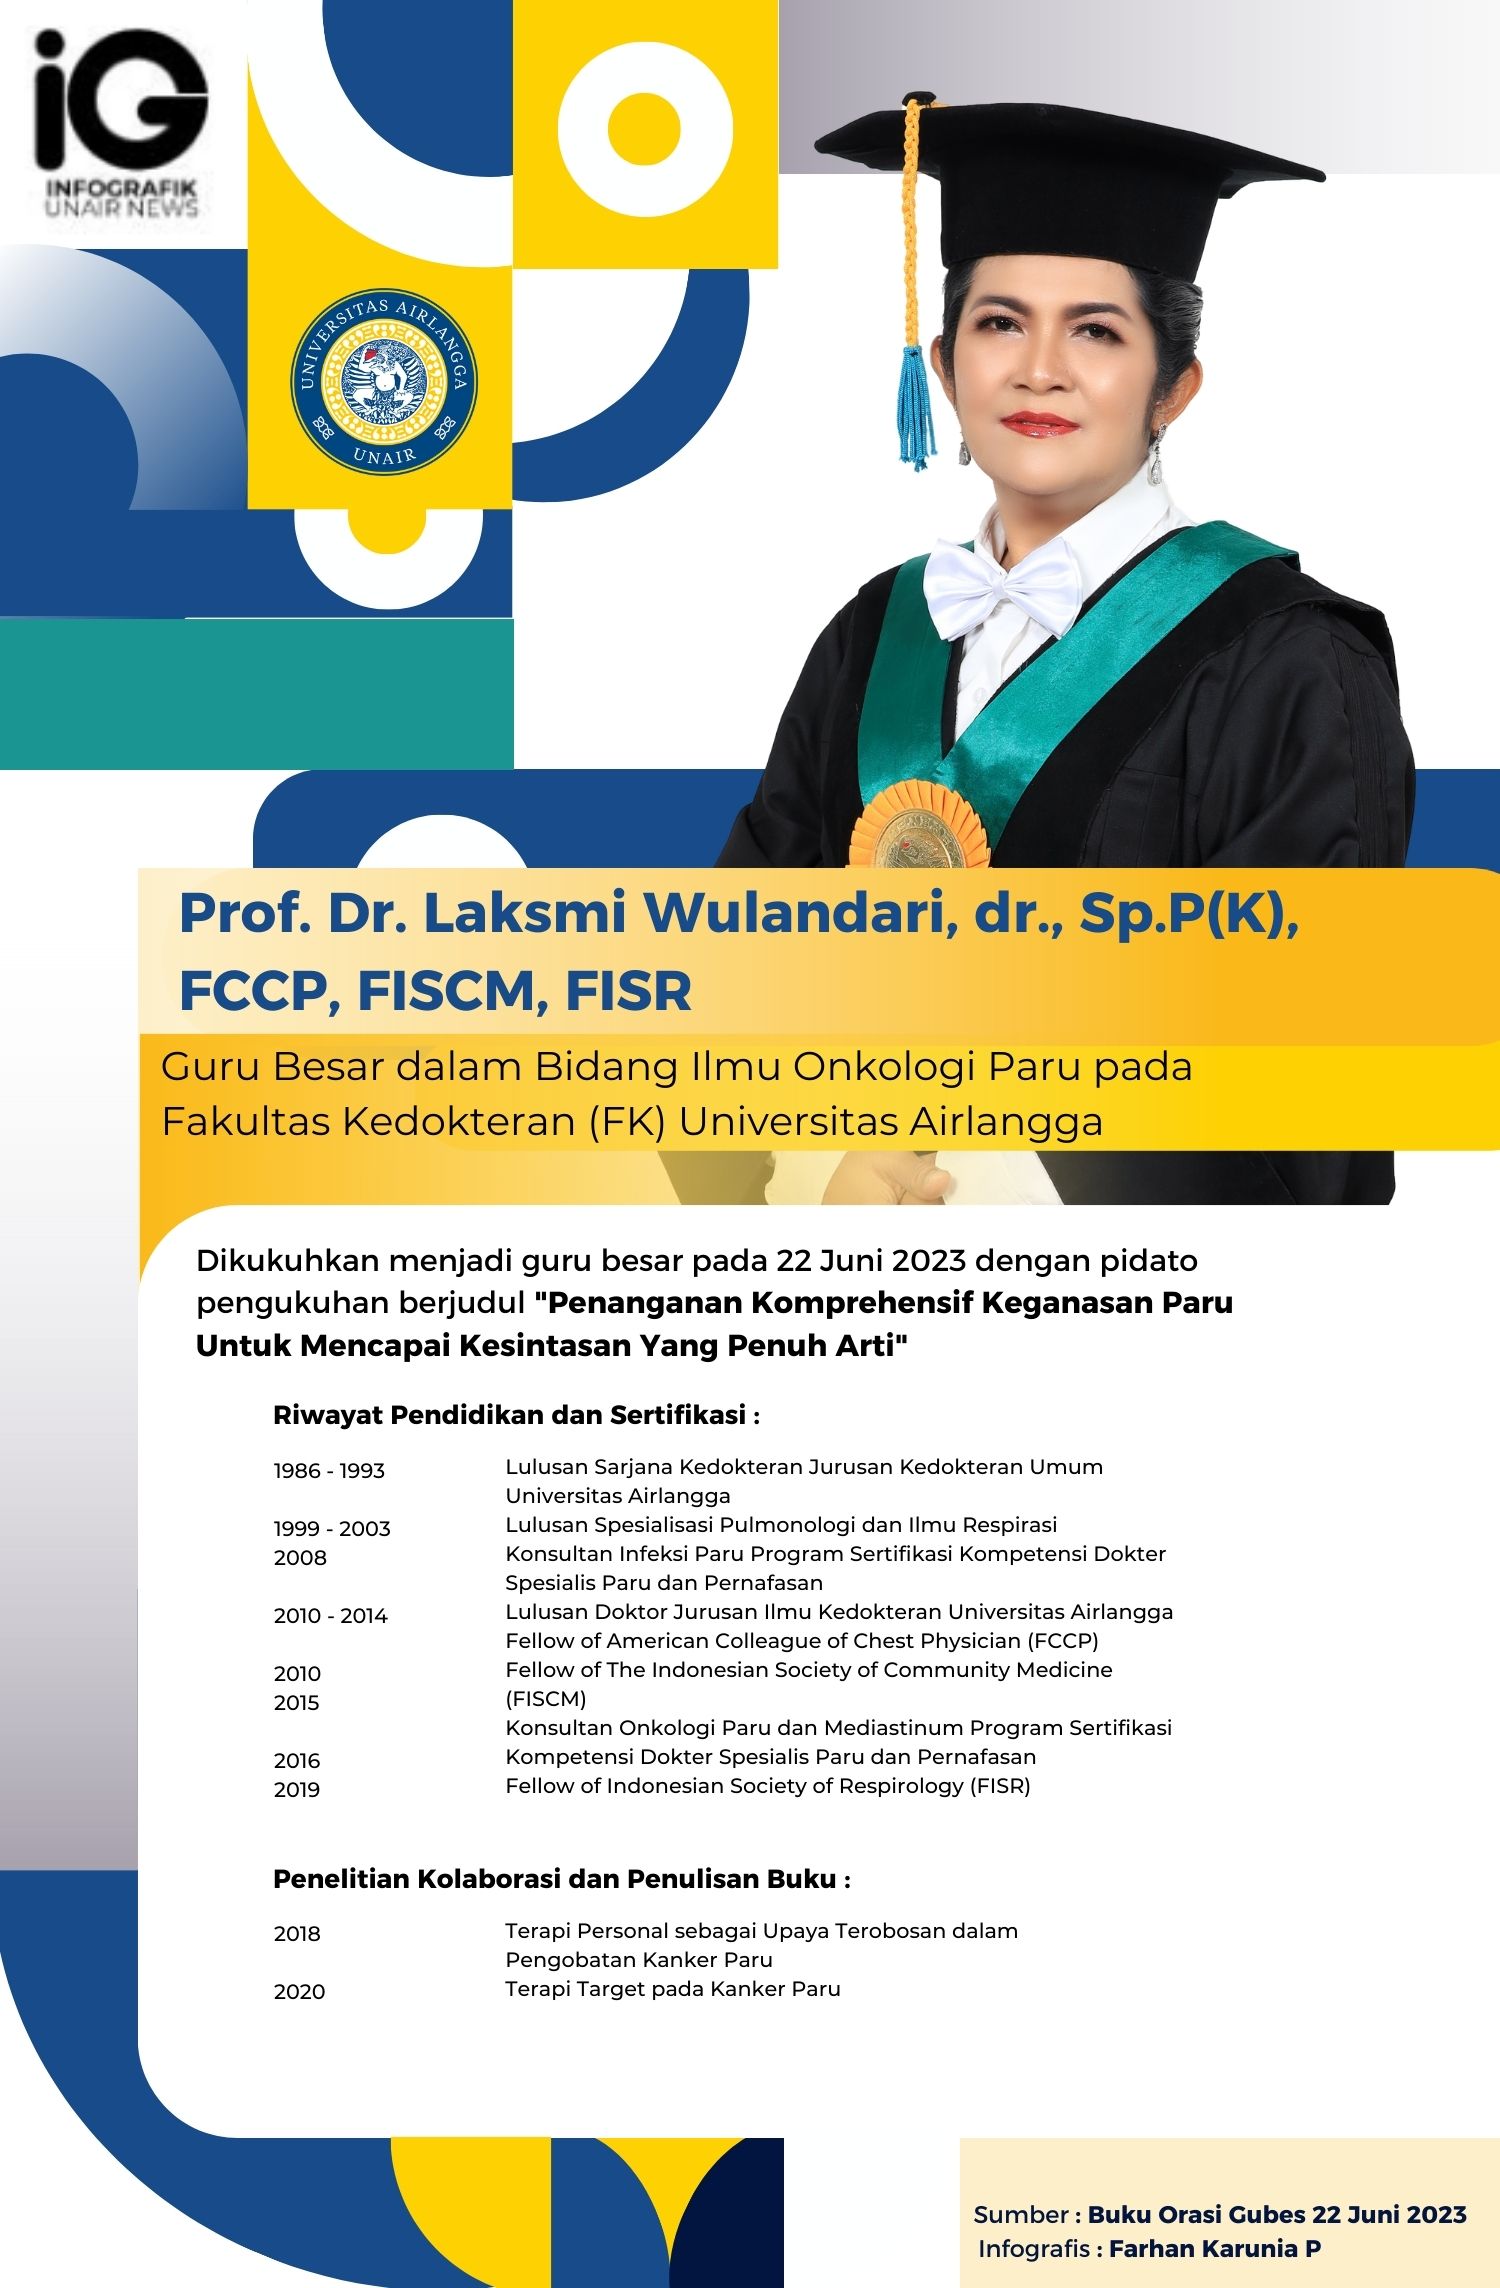 Infografik: Profil Guru Besar Prof. Dr. Laksmi Wulandari, dr., Sp.P(K), FCCP, FISCM, FISR